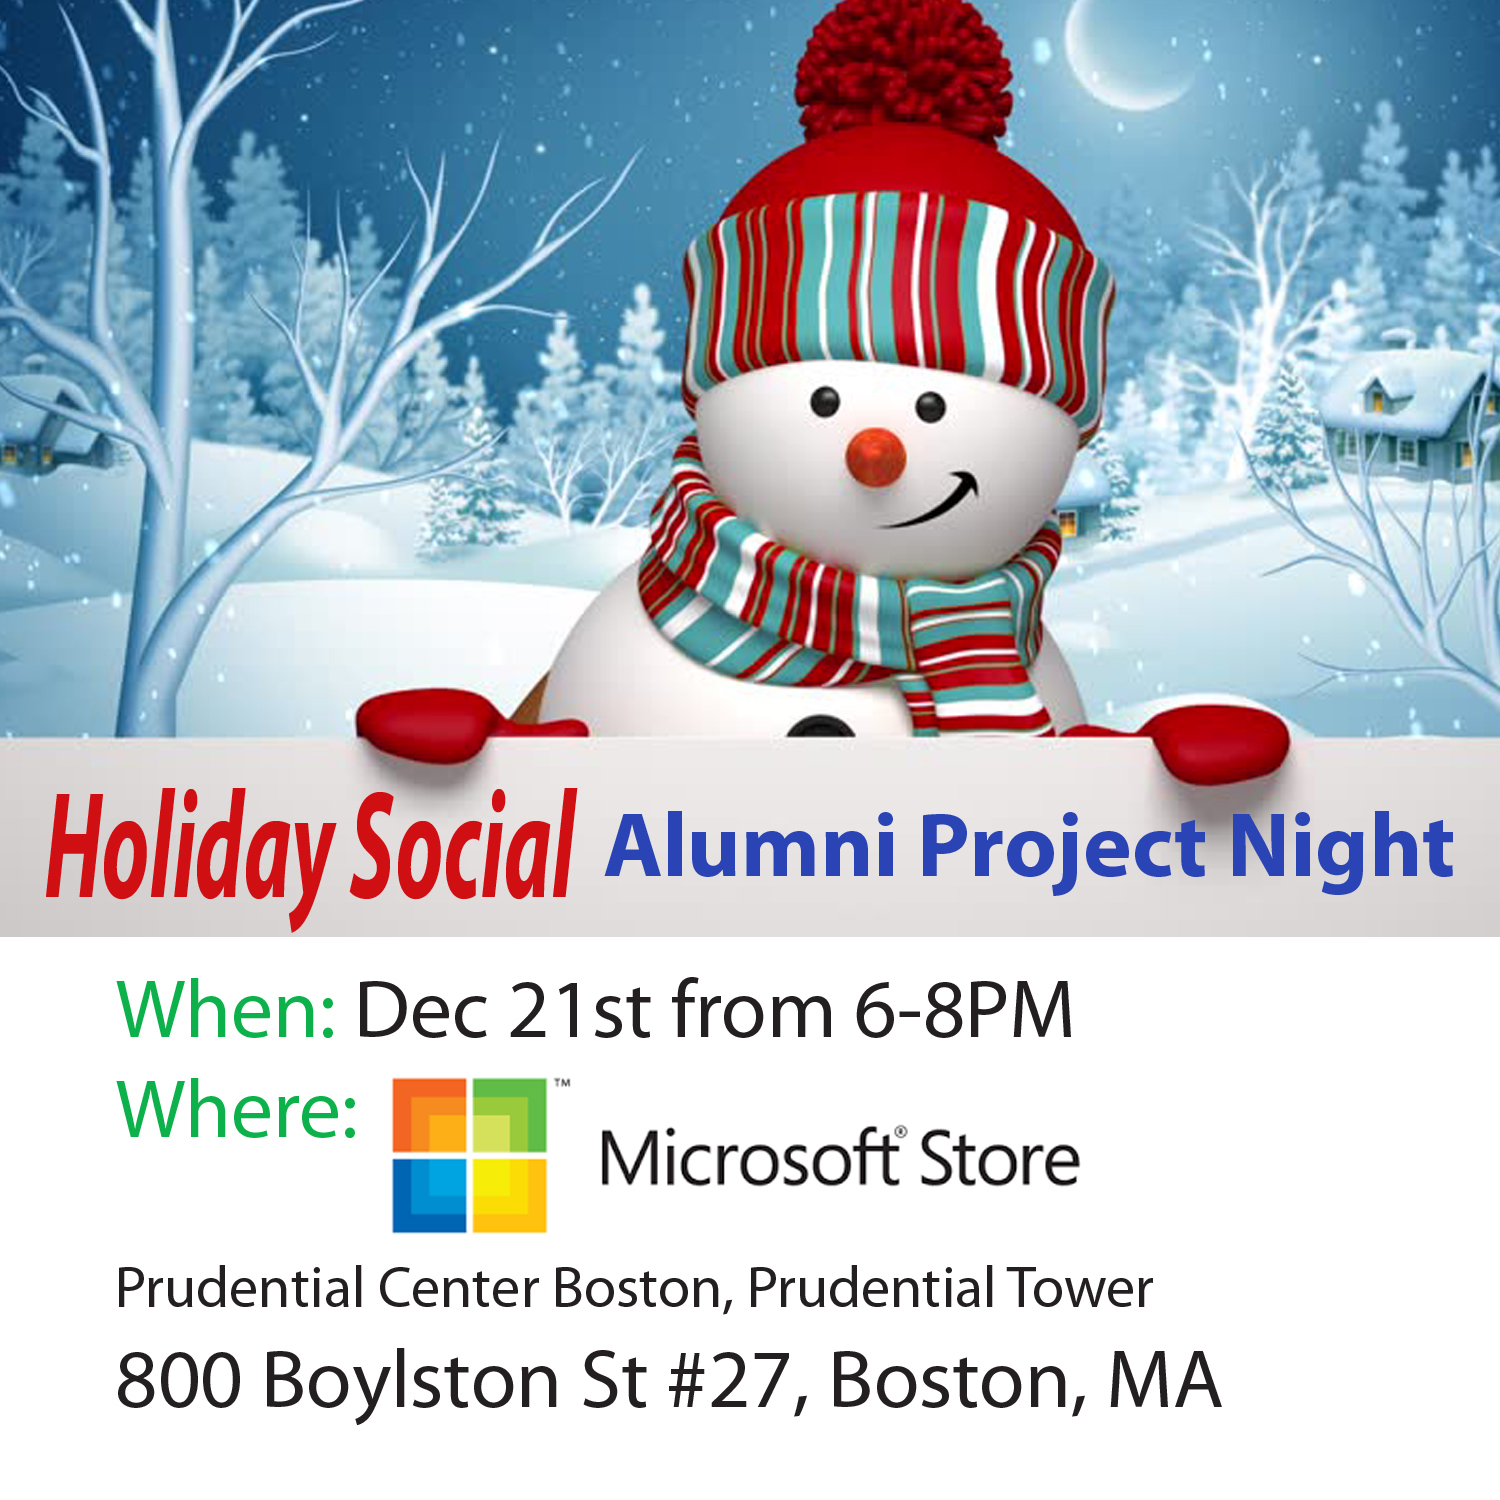 Alumni Project Night - Holiday Social